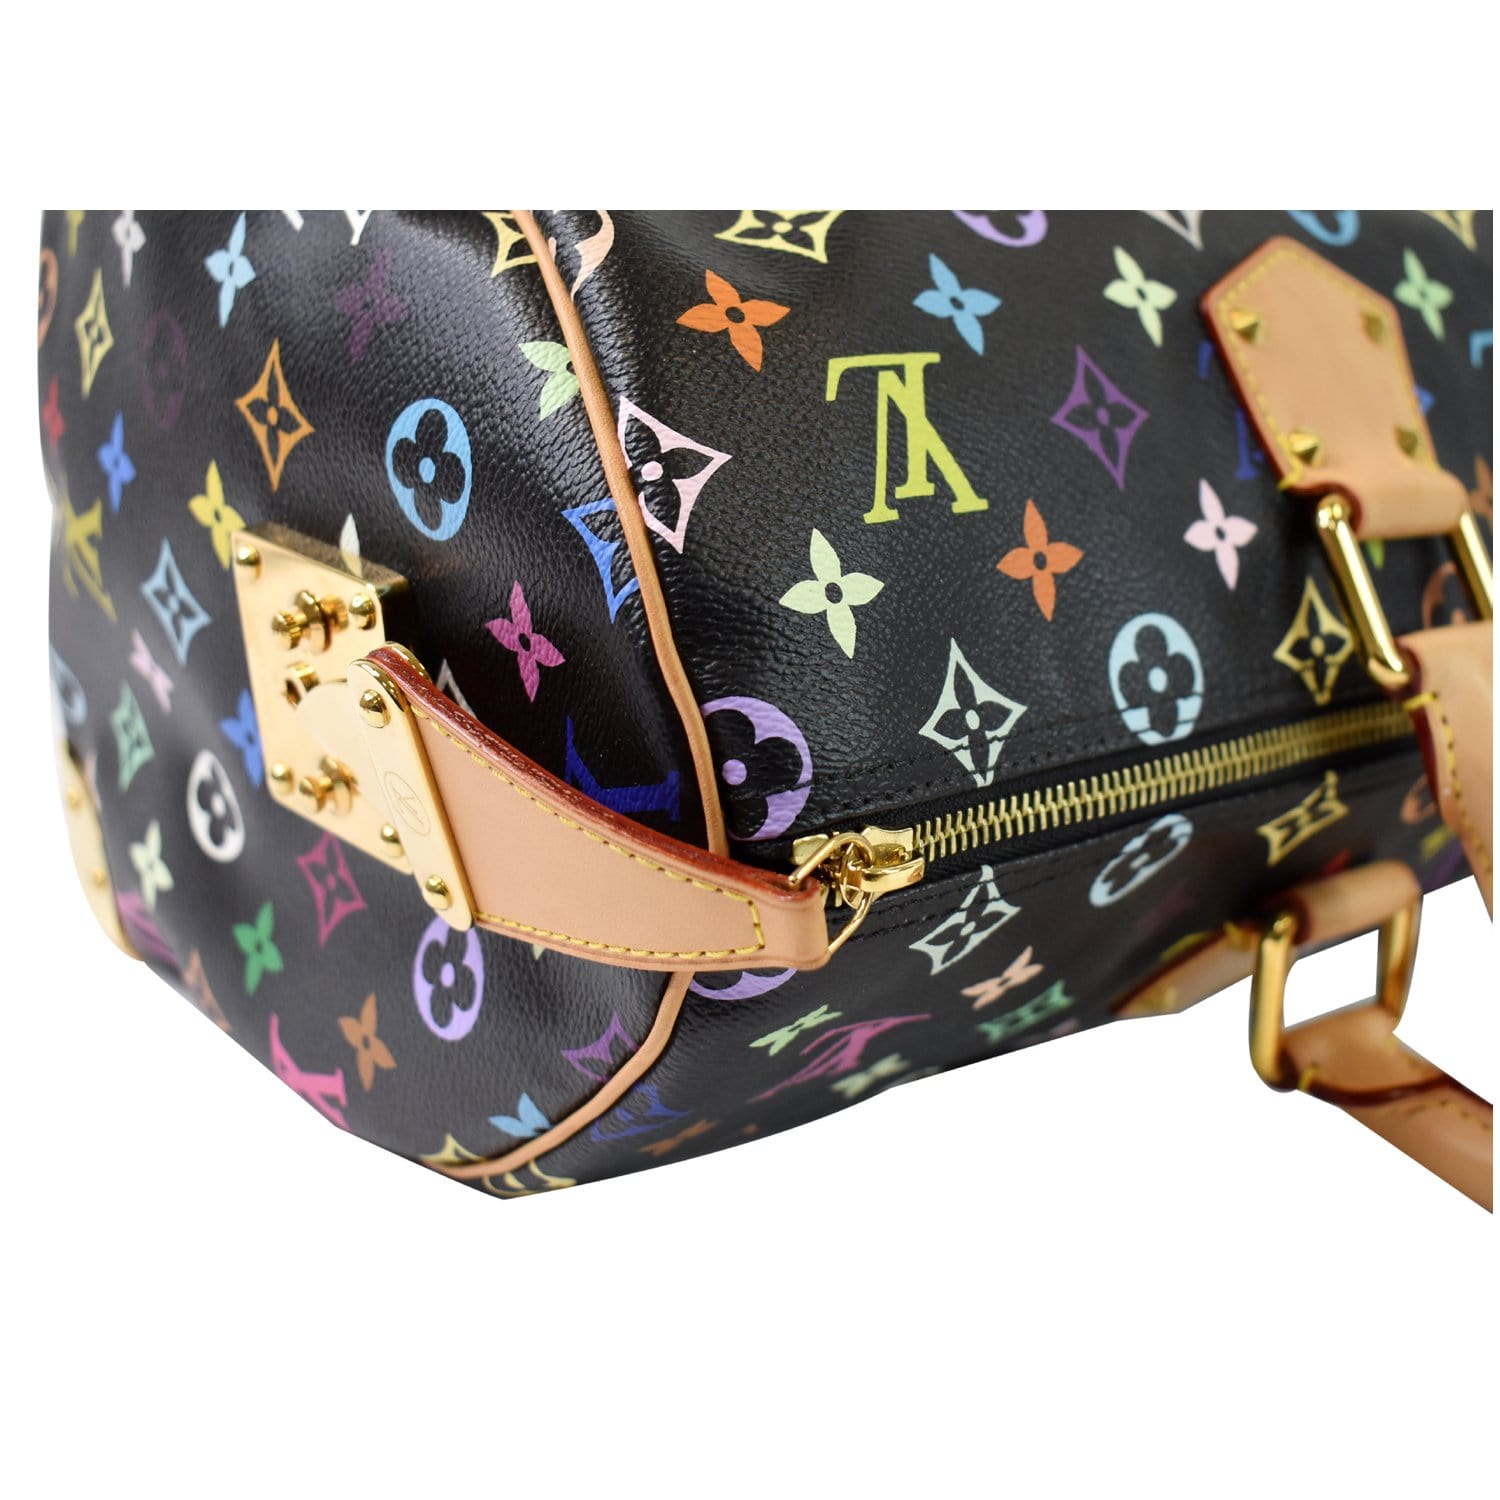 What's in my bag, Louis Vuitton, SPEEDY 40